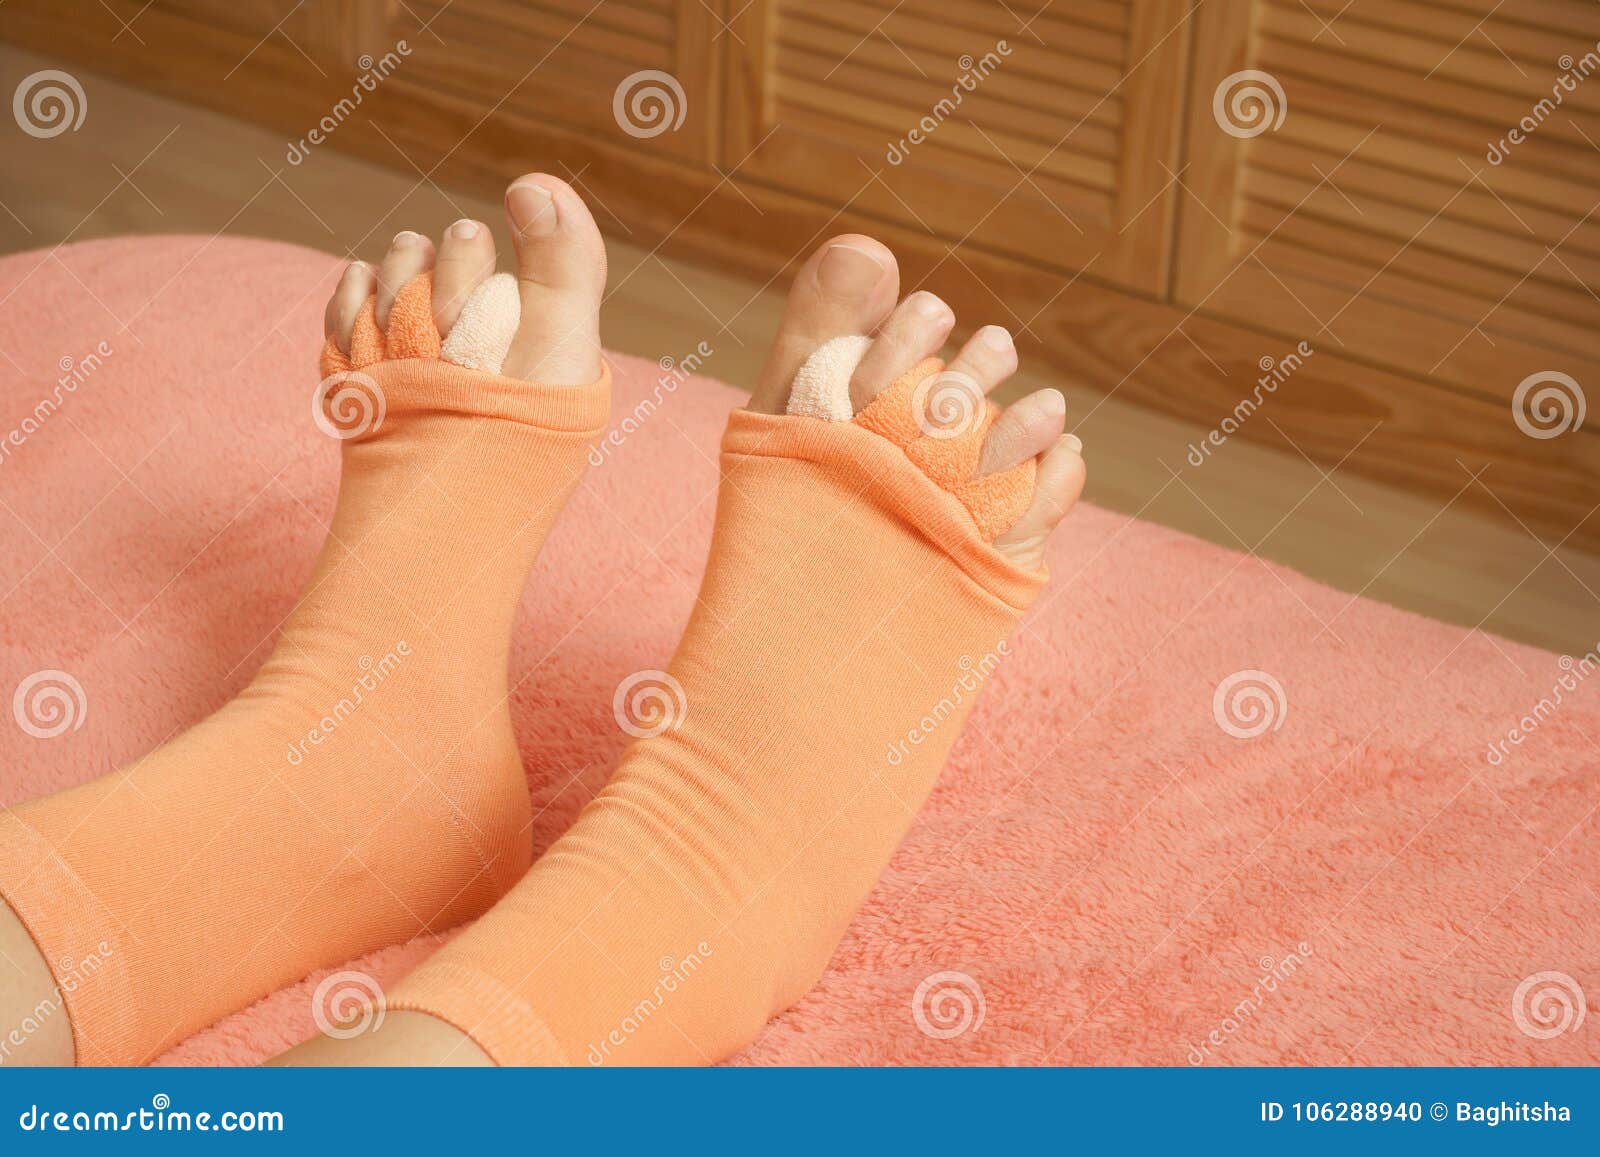 Woman Wearing Yoga Toe Separator Socks in Bed Stock Photo - Image